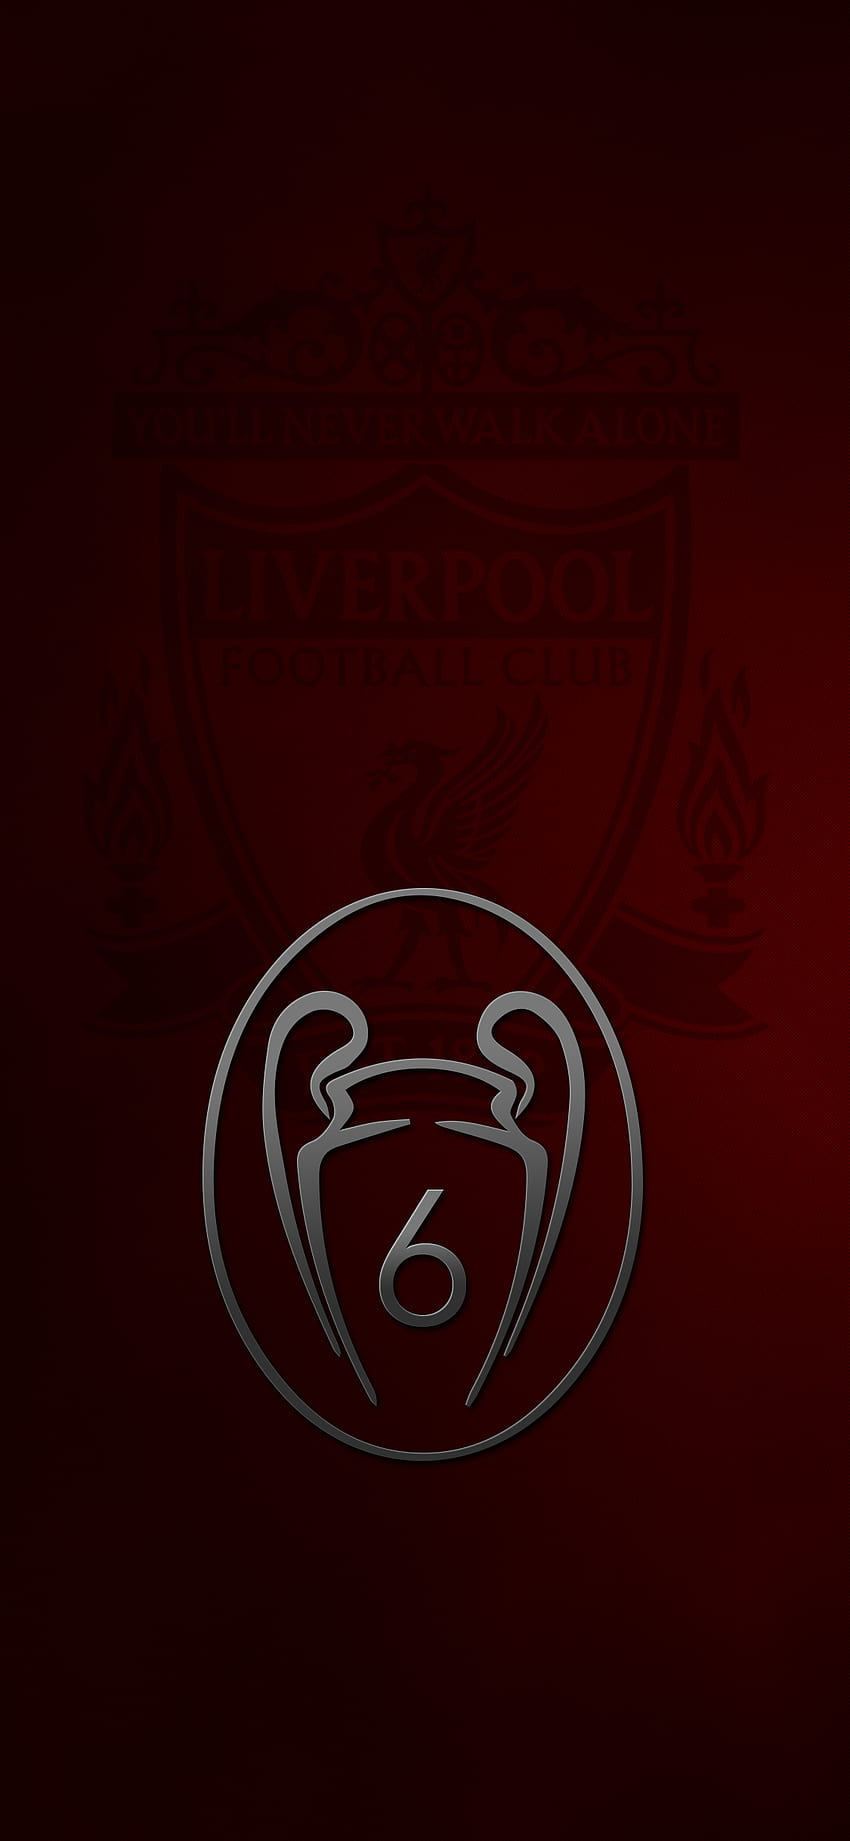 Liverpool FC wallpaper ponsel HD